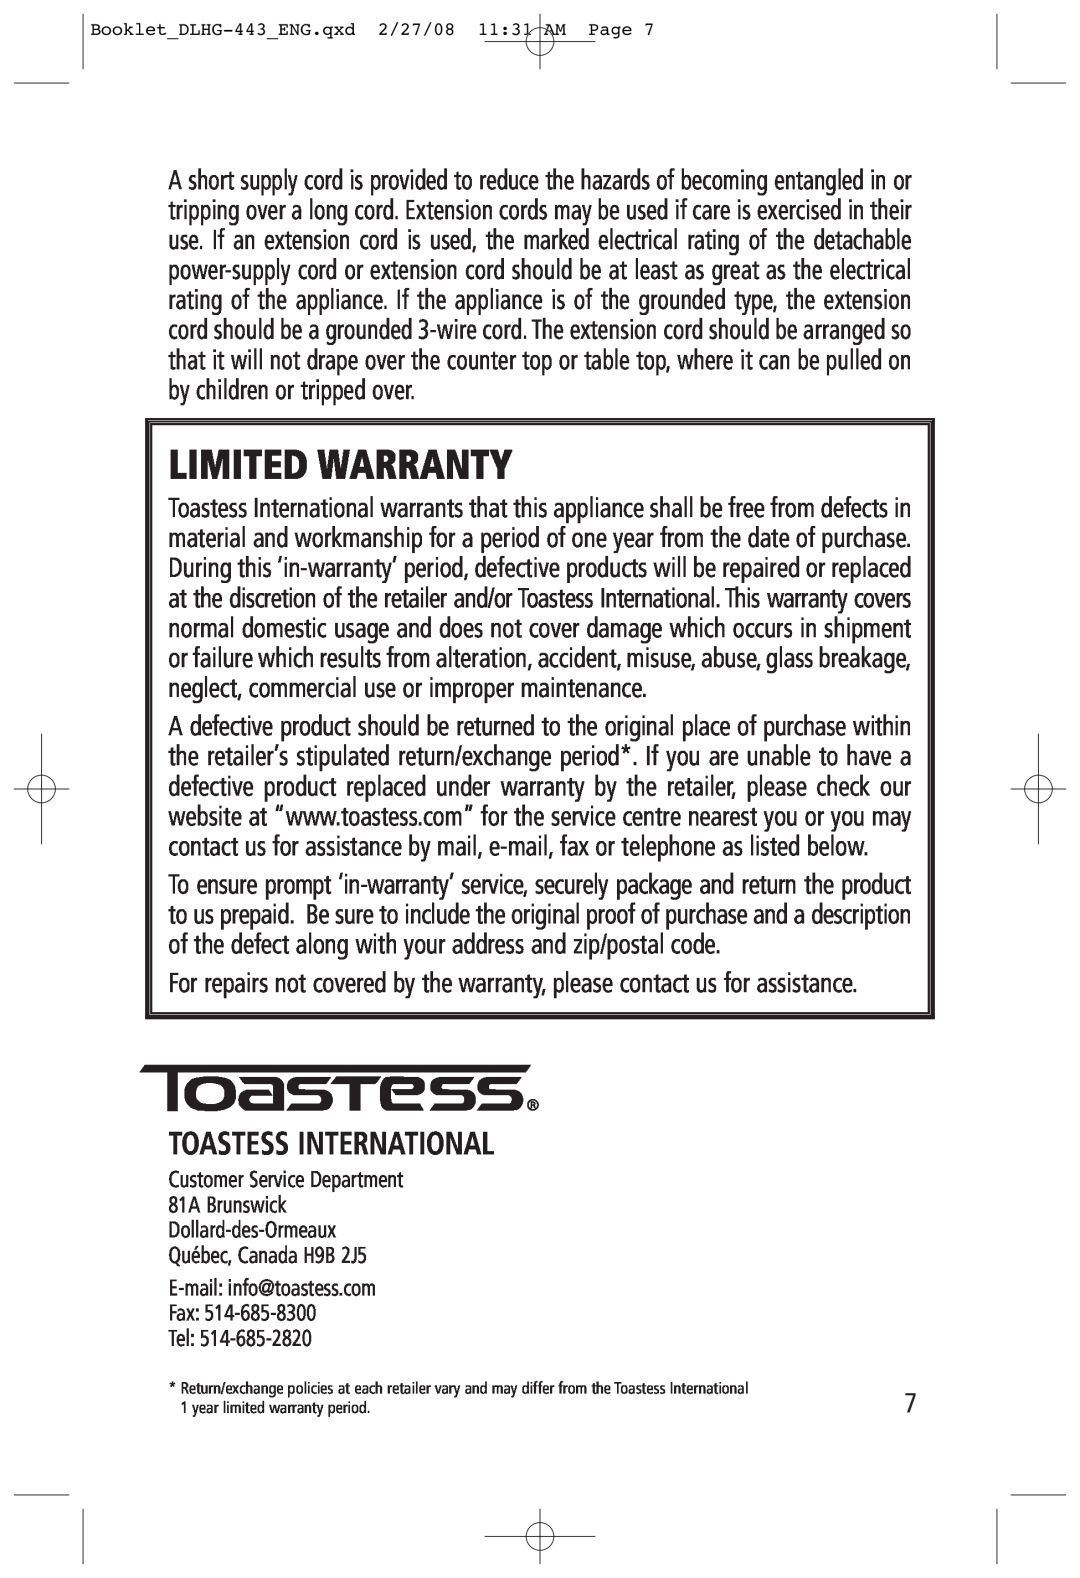 Toastess DLHG-443 manual Toastess International, Limited Warranty 